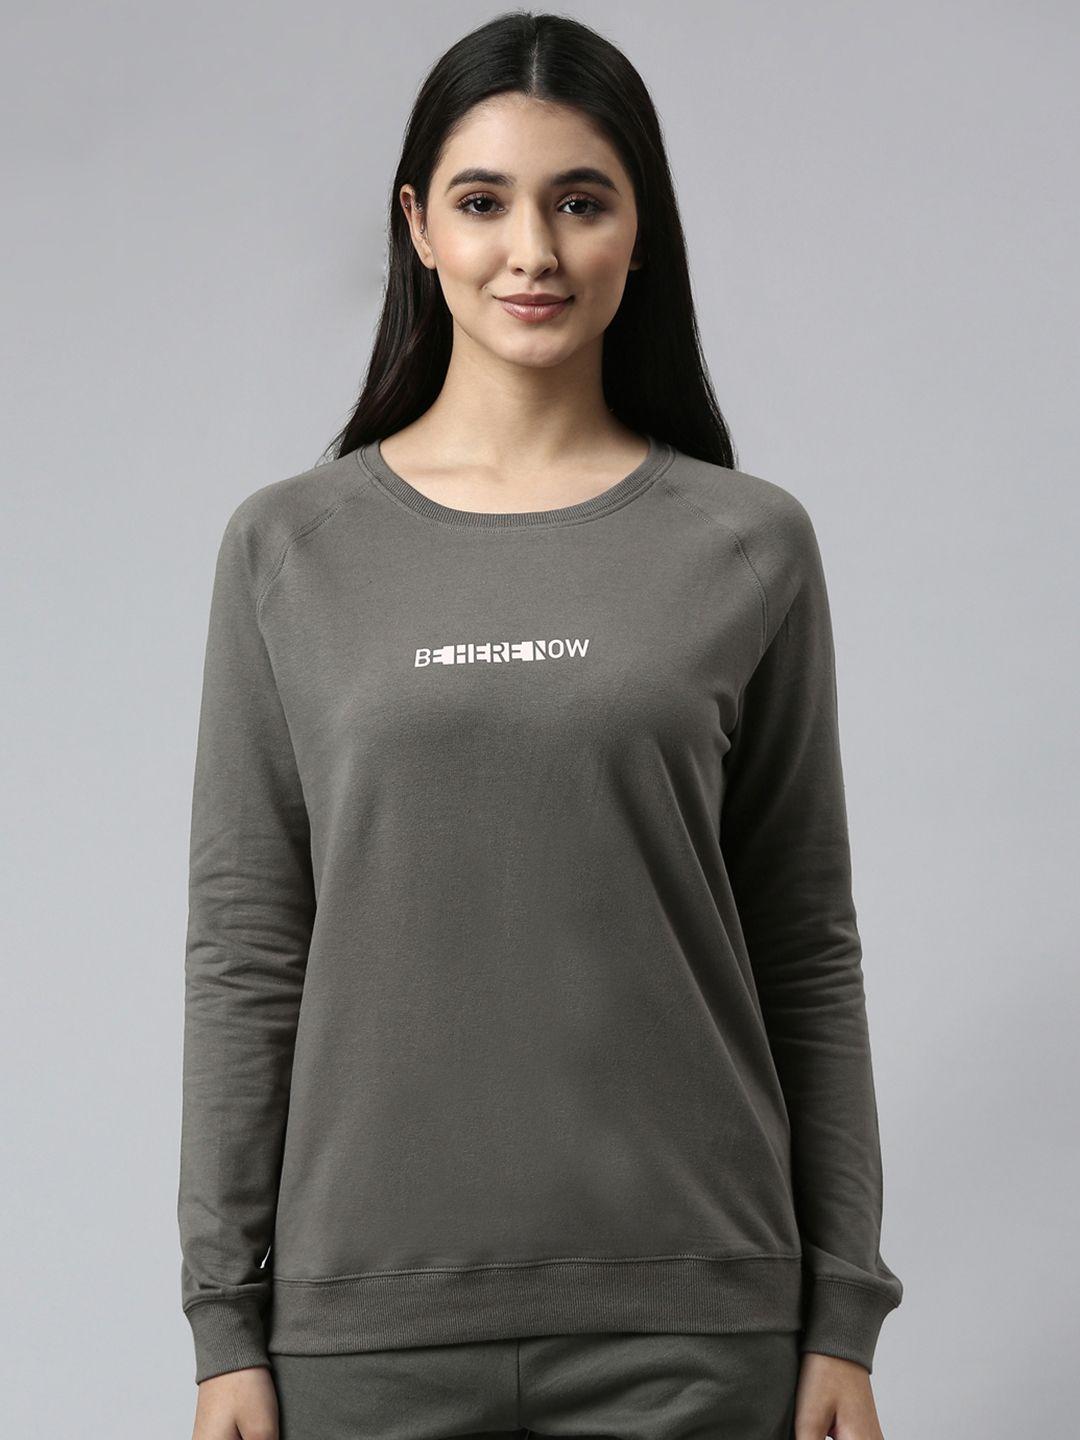 enamor women crew neck long sleeves stretch cotton basic sweatshirt e079